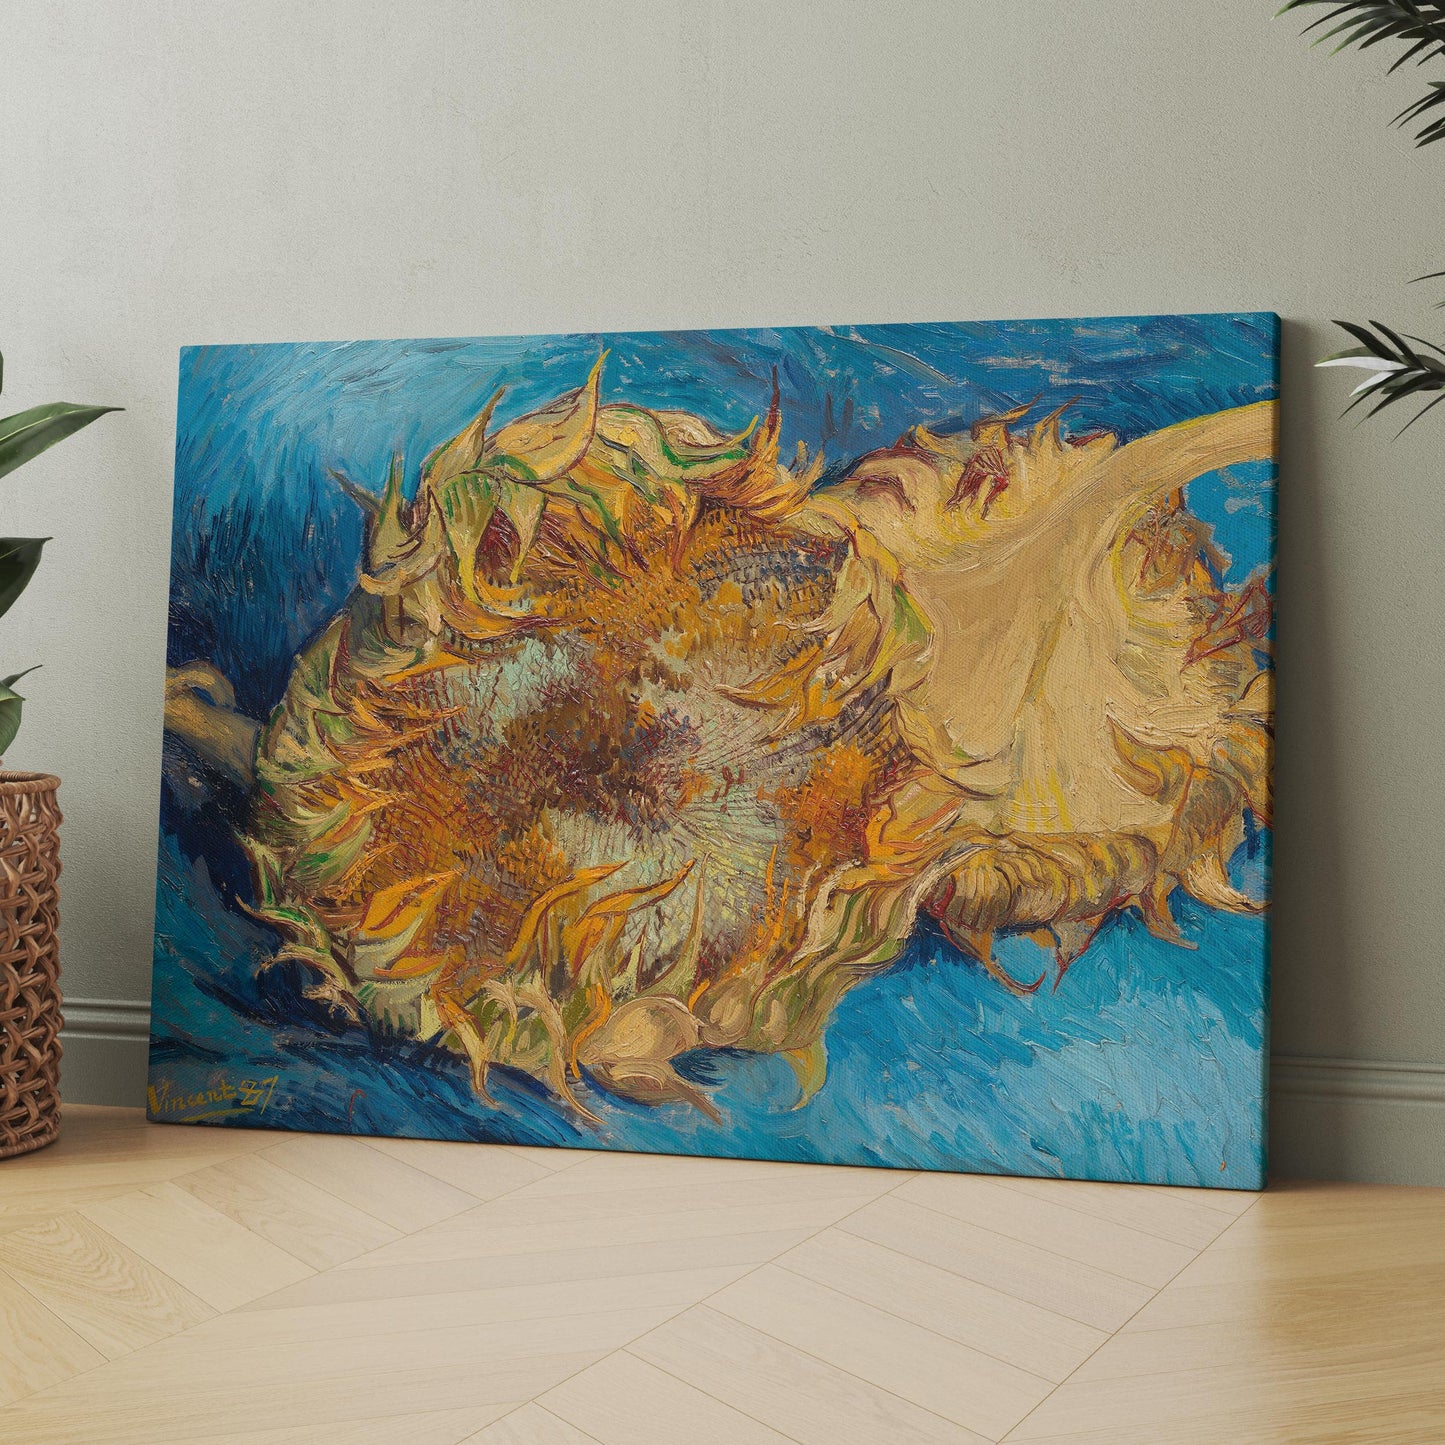 Sunflowers (1887) by Van Gogh